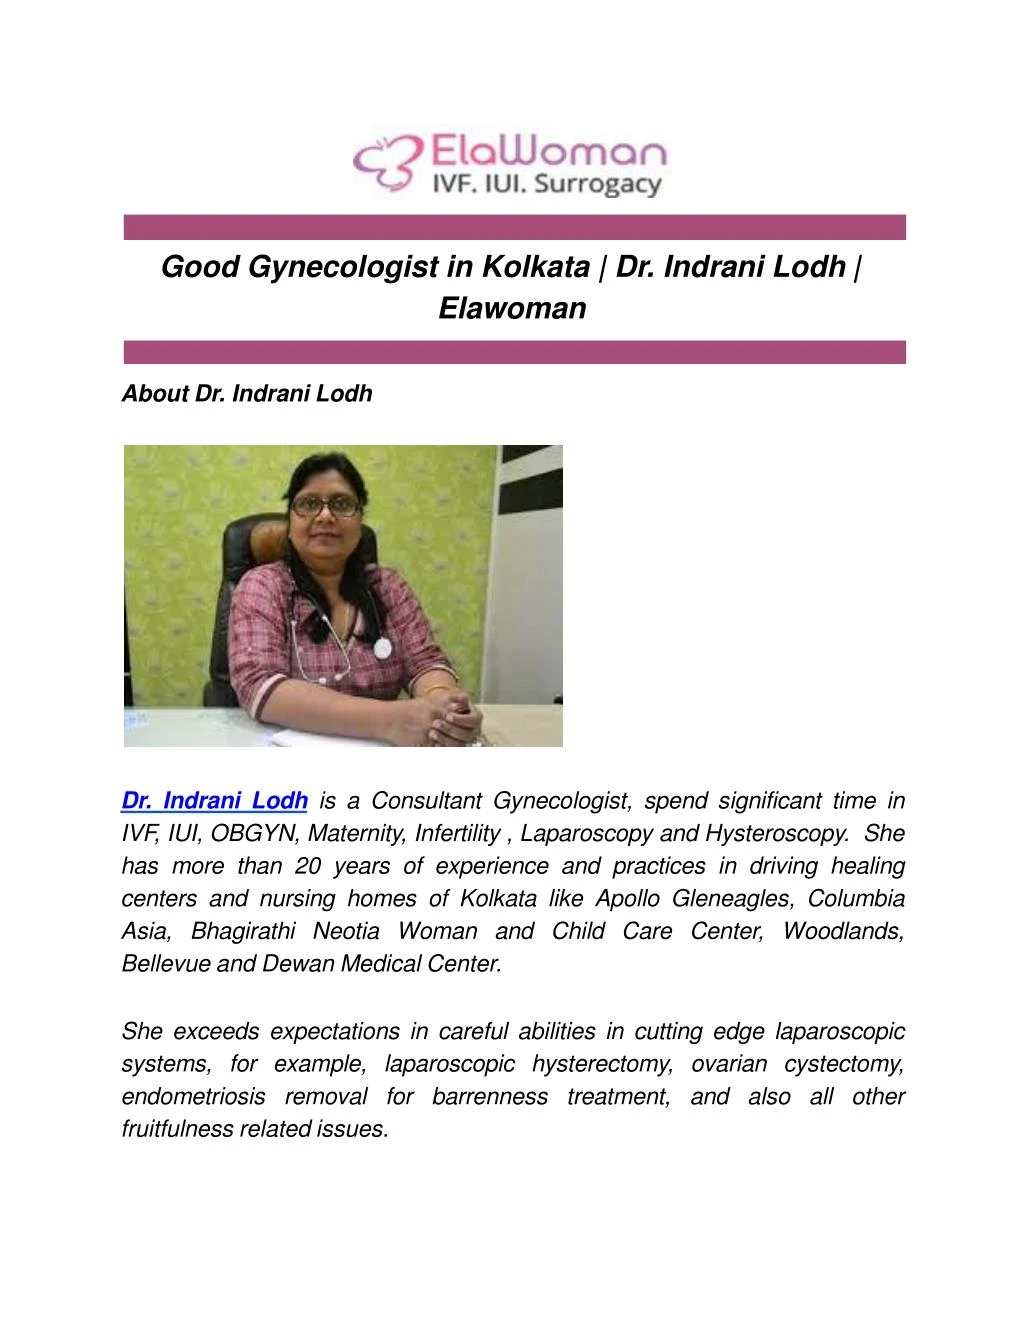 good gynecologist in kolkata dr indrani lodh